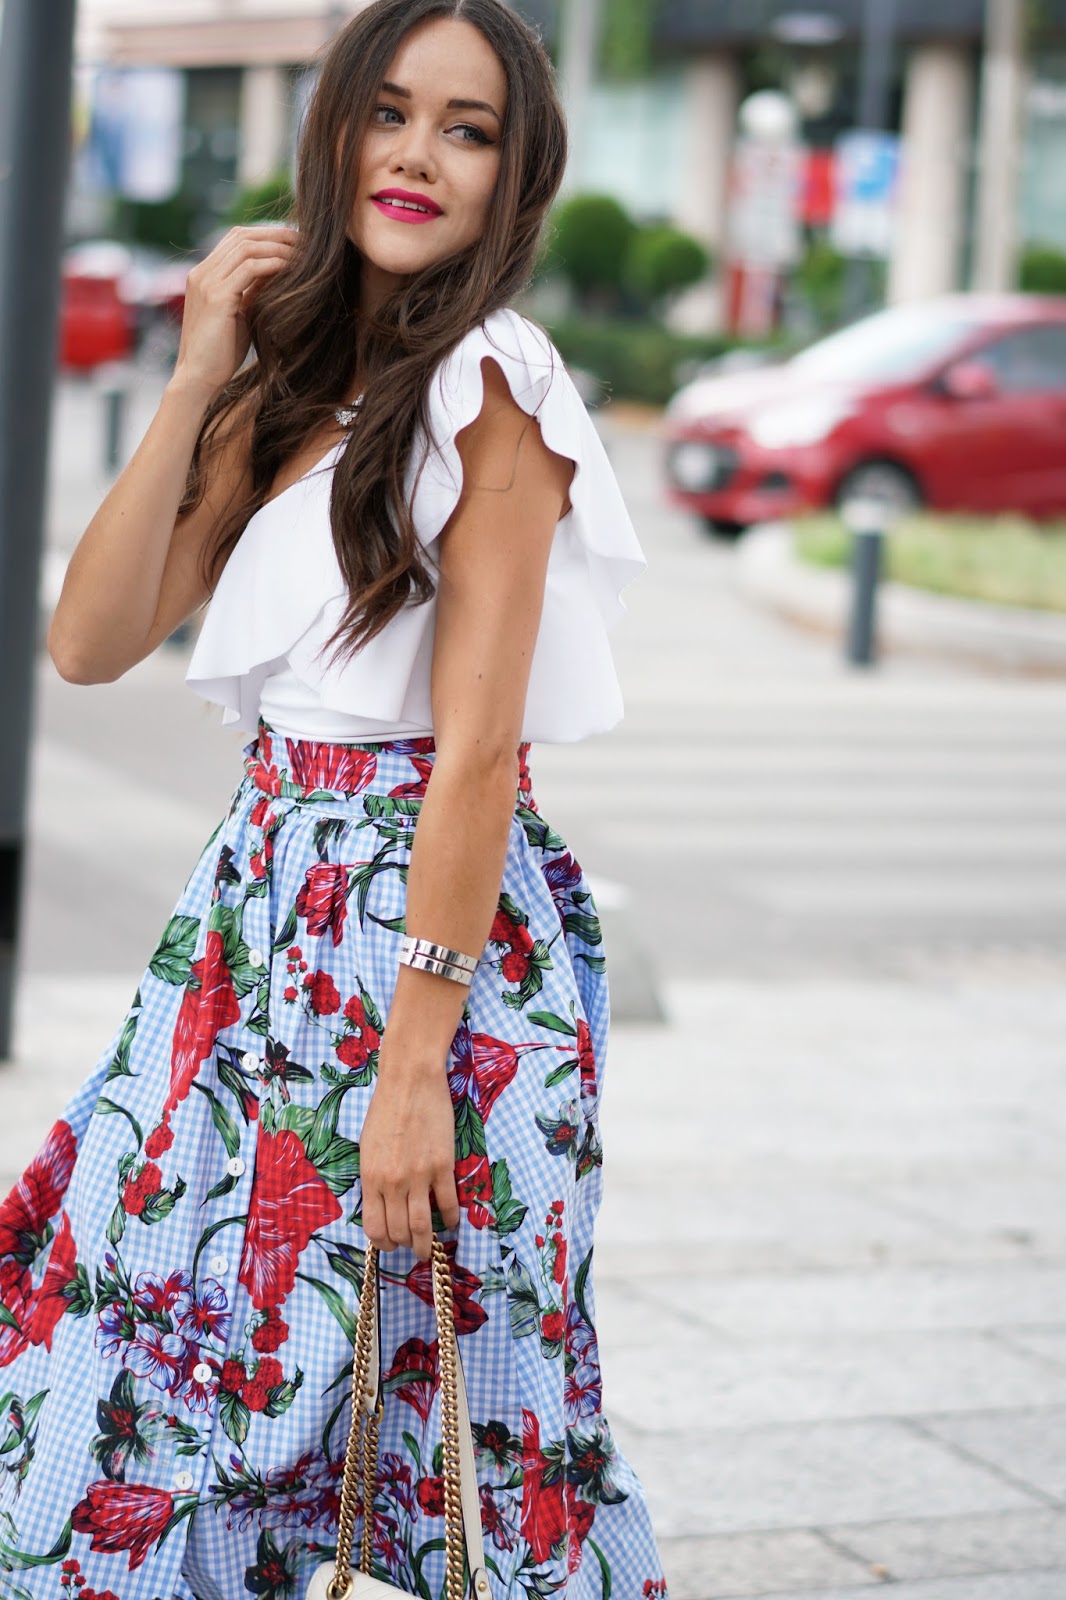 Floral&Gingham skirt! | MODA CAPITAL